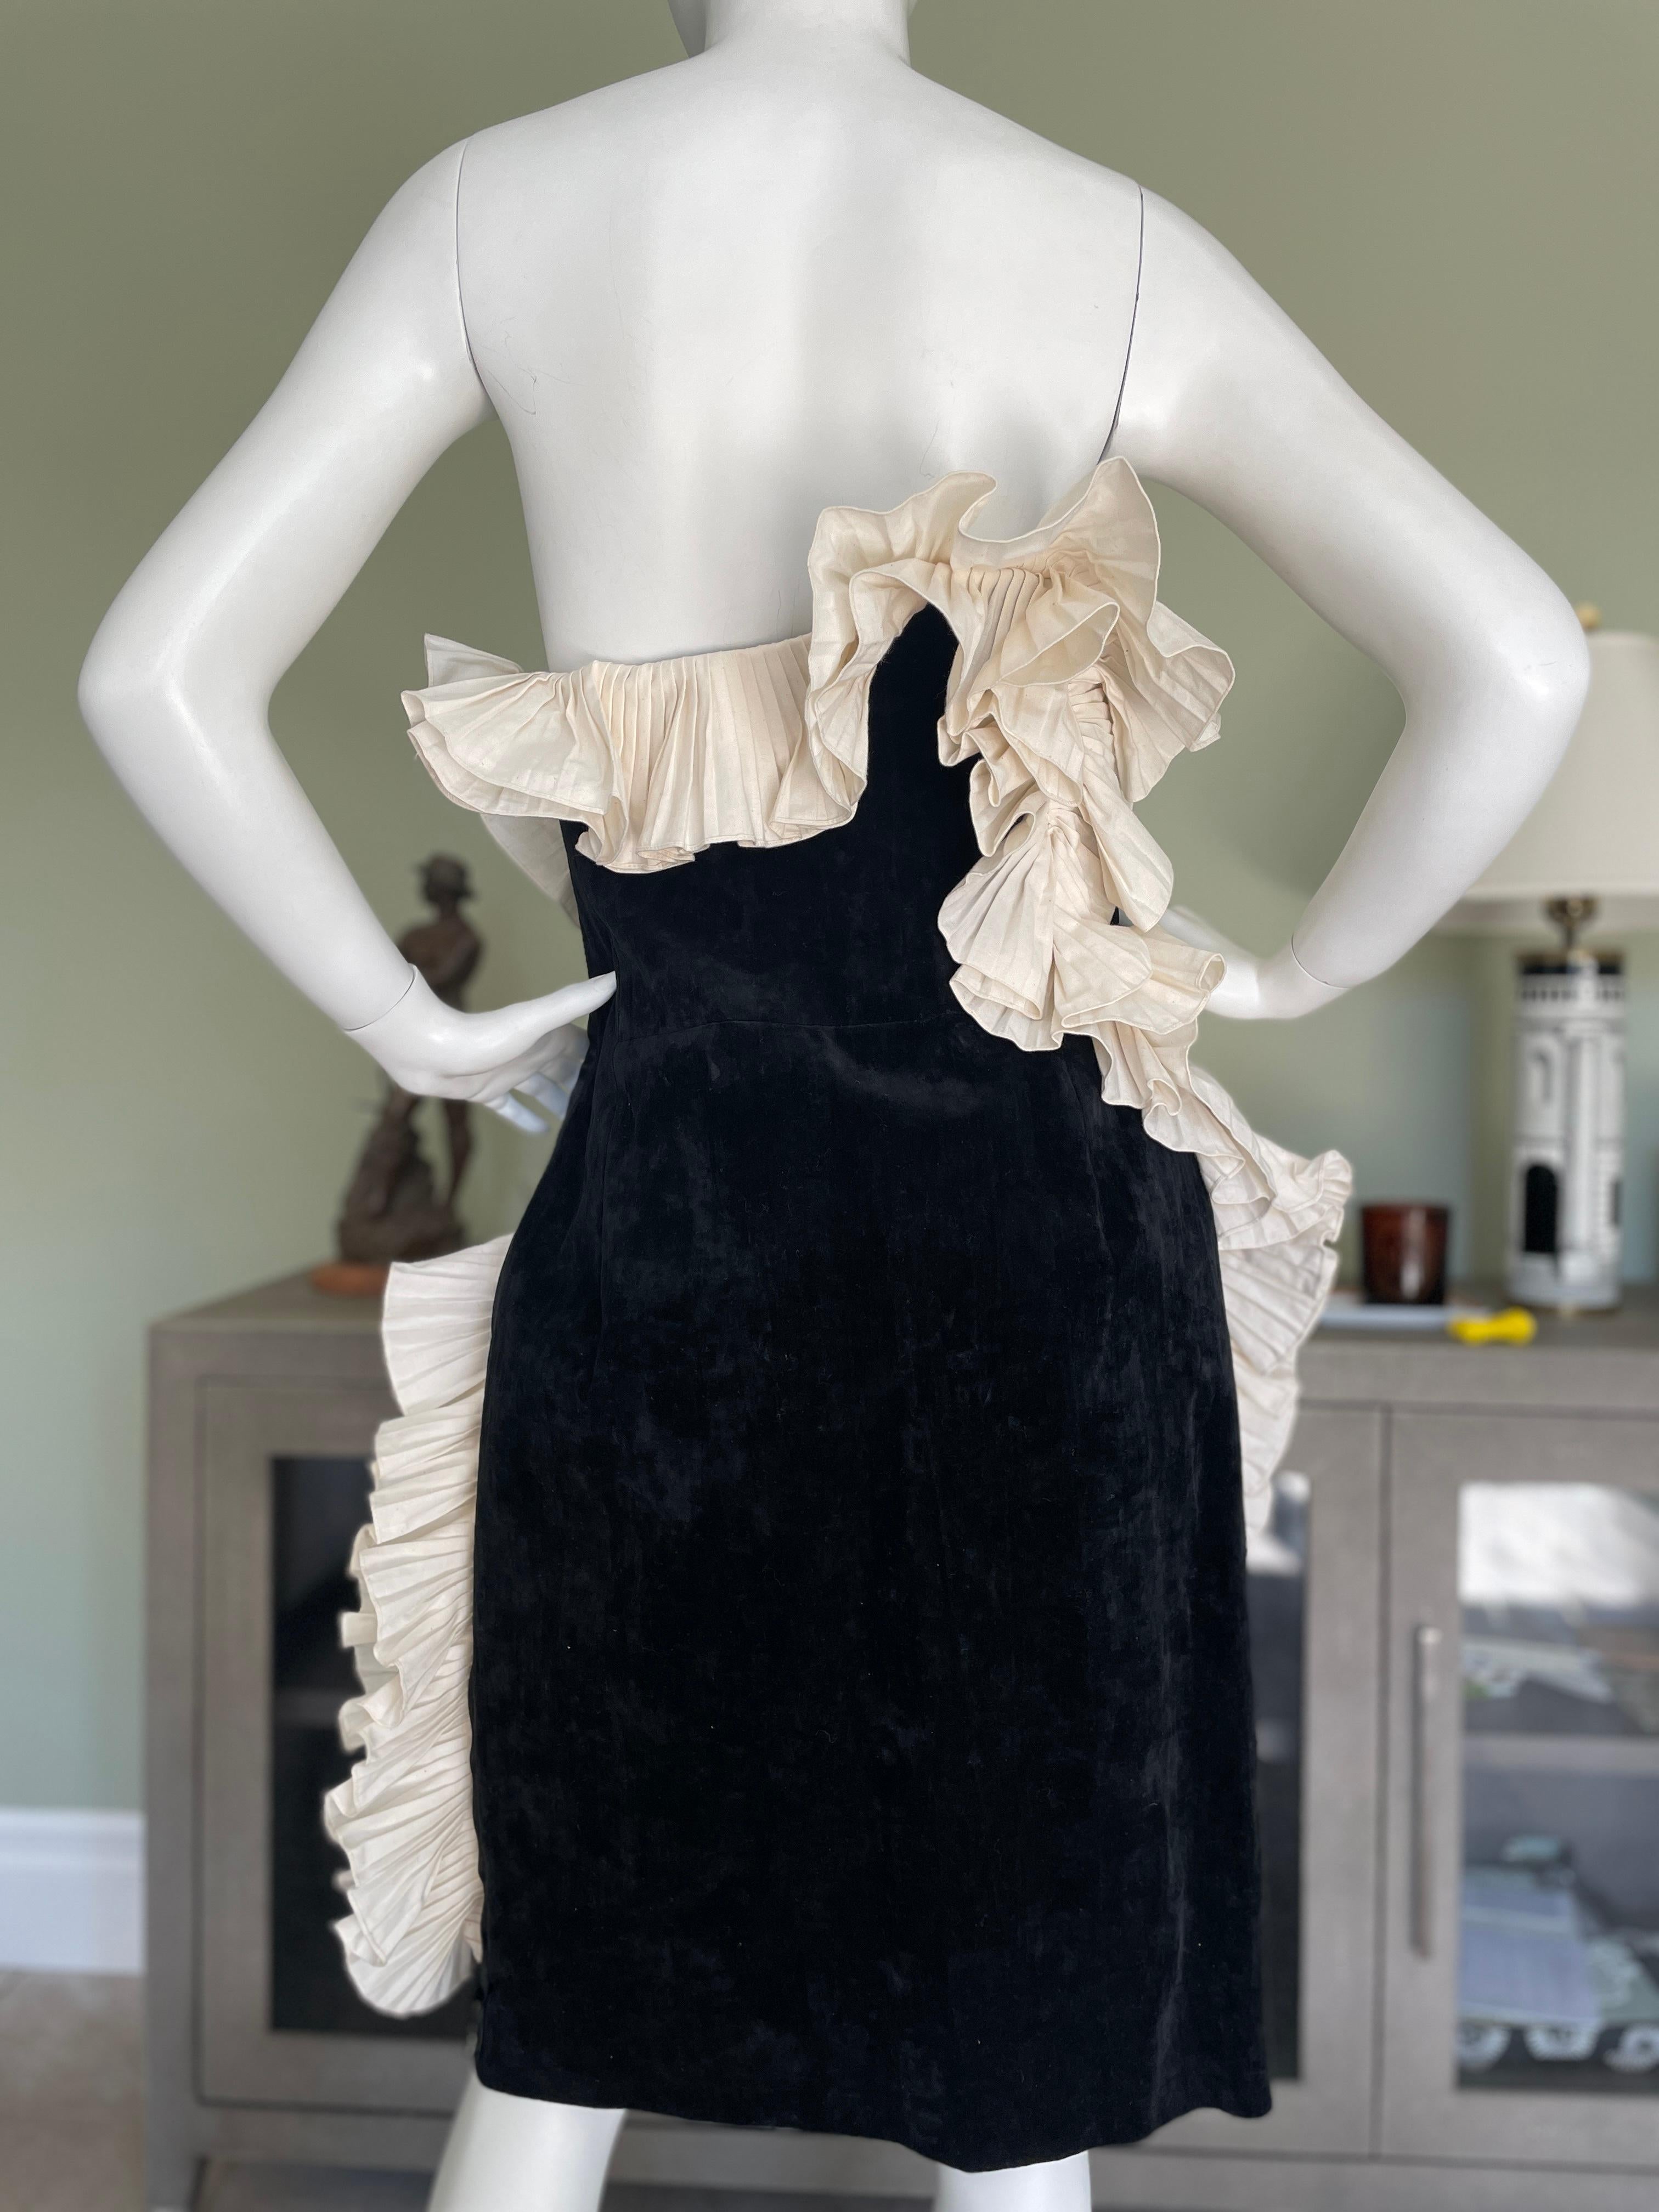 Lanvin by Alber Elbaz Black Velvet Dress w Dramatic White Ruffle from Fall 2012 For Sale 2